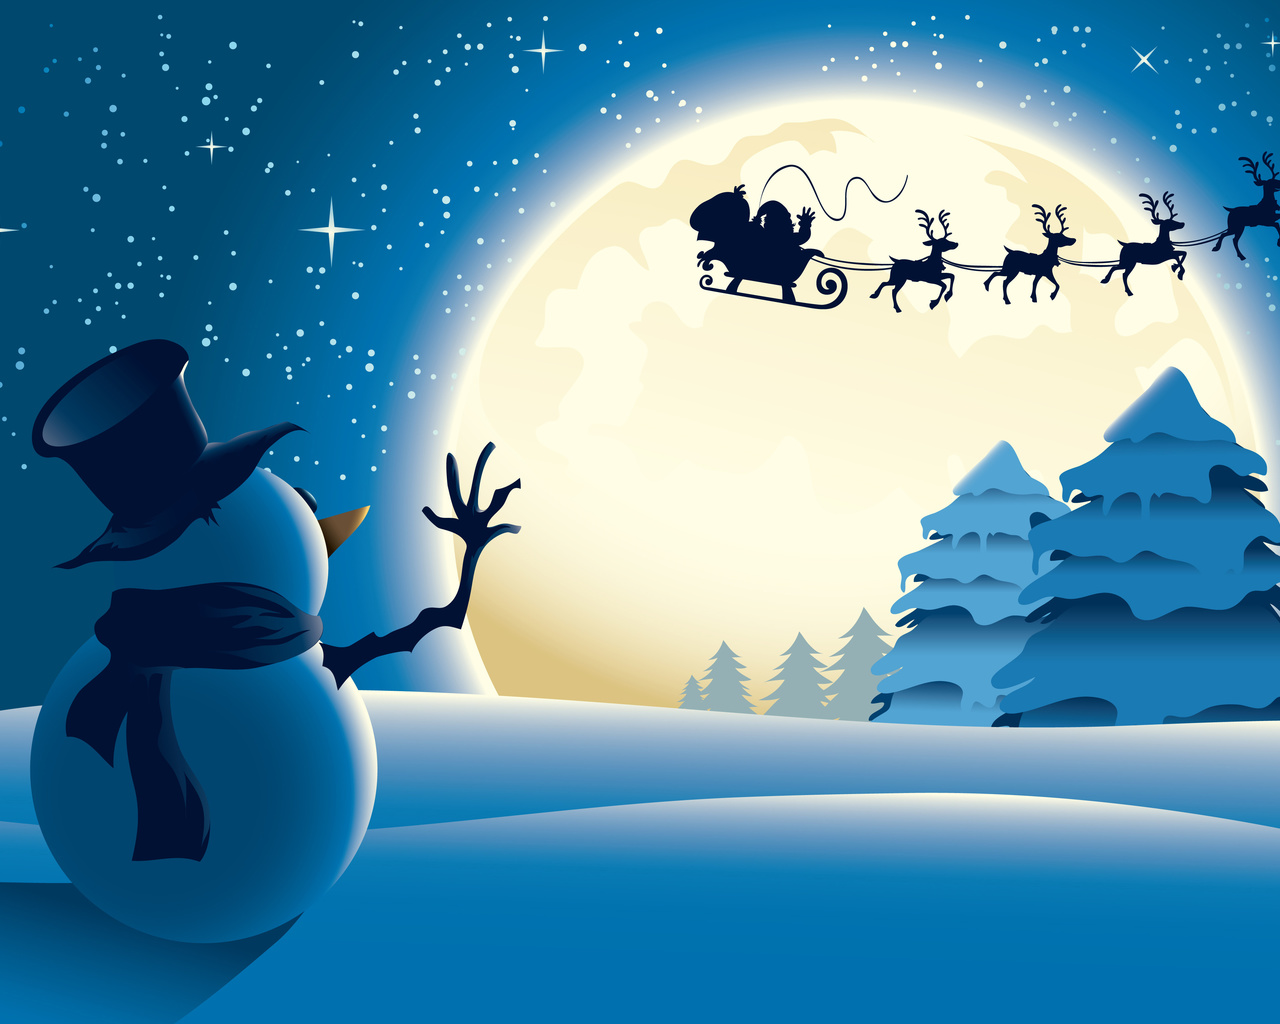 snowman, snow, - ,   , ,  , , -, , ,  , santa claus is coming, merry christmas, trees, new year, snow, santa sleigh, , snowman, stars, full moon, reindeer,  